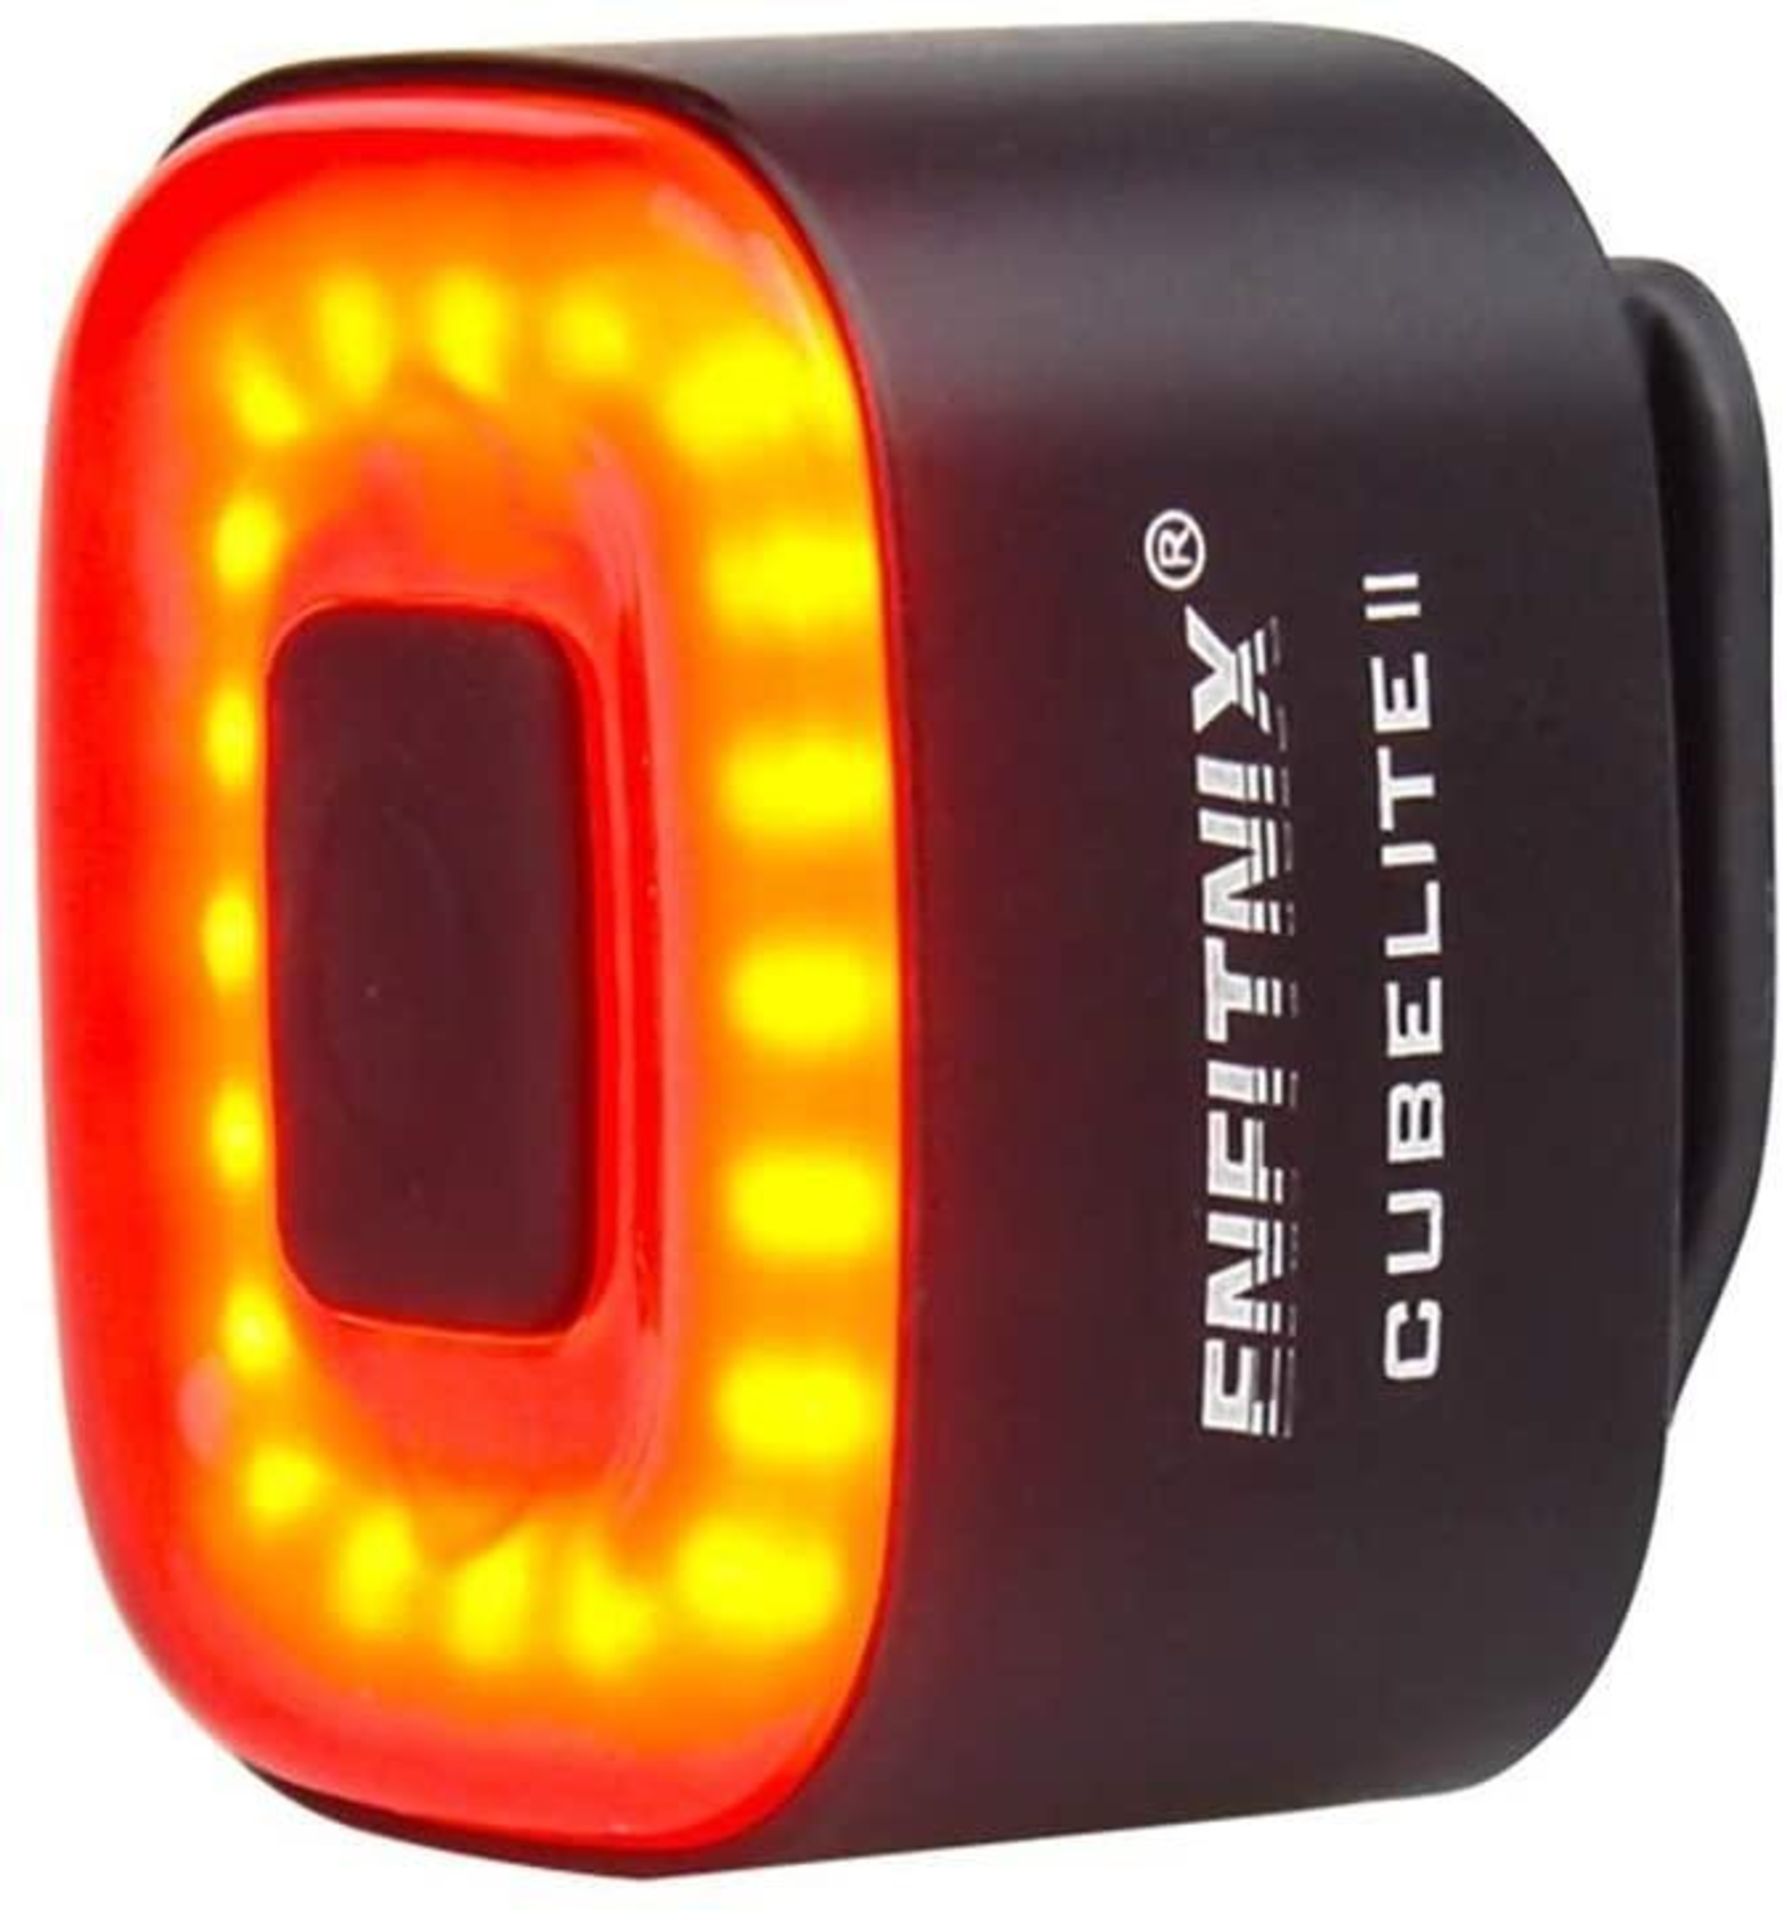 ENFITNIX Bike Tail Light, CUBELITE II USB Rechargeable LED Smart Bicycle Rear Light £22.99 RRP